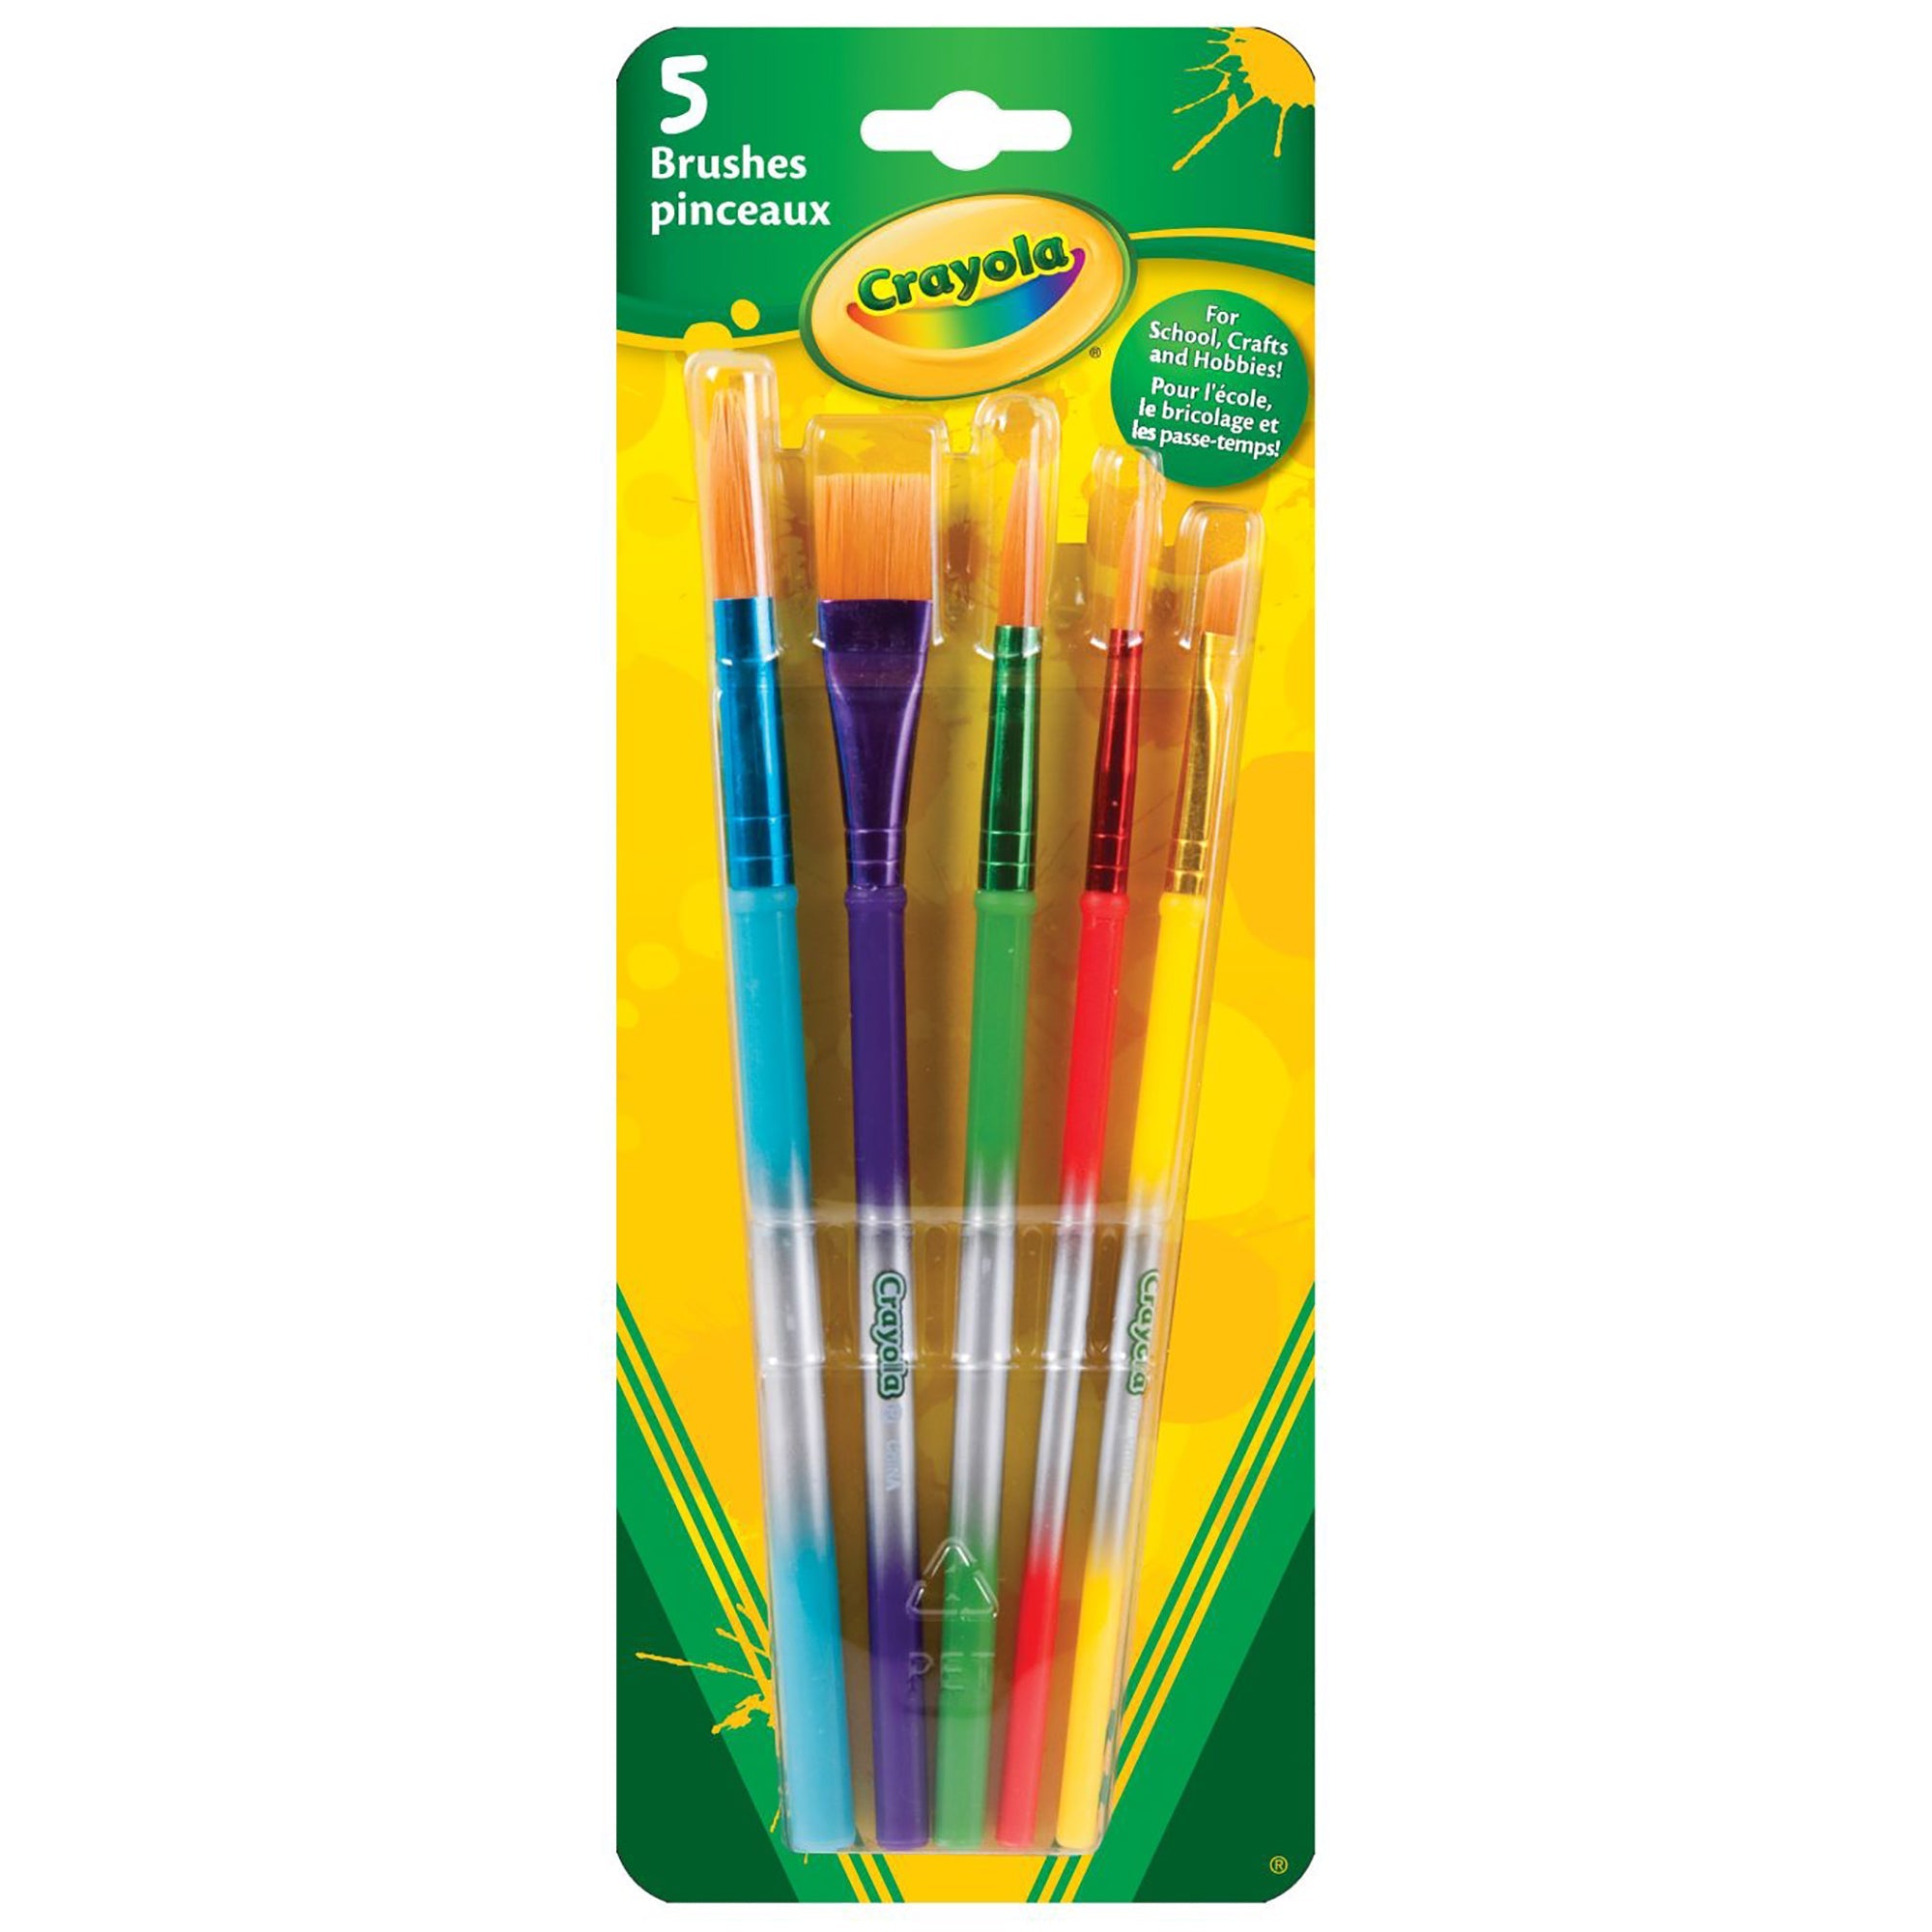 Crayola 5 Premium Paintbrushes